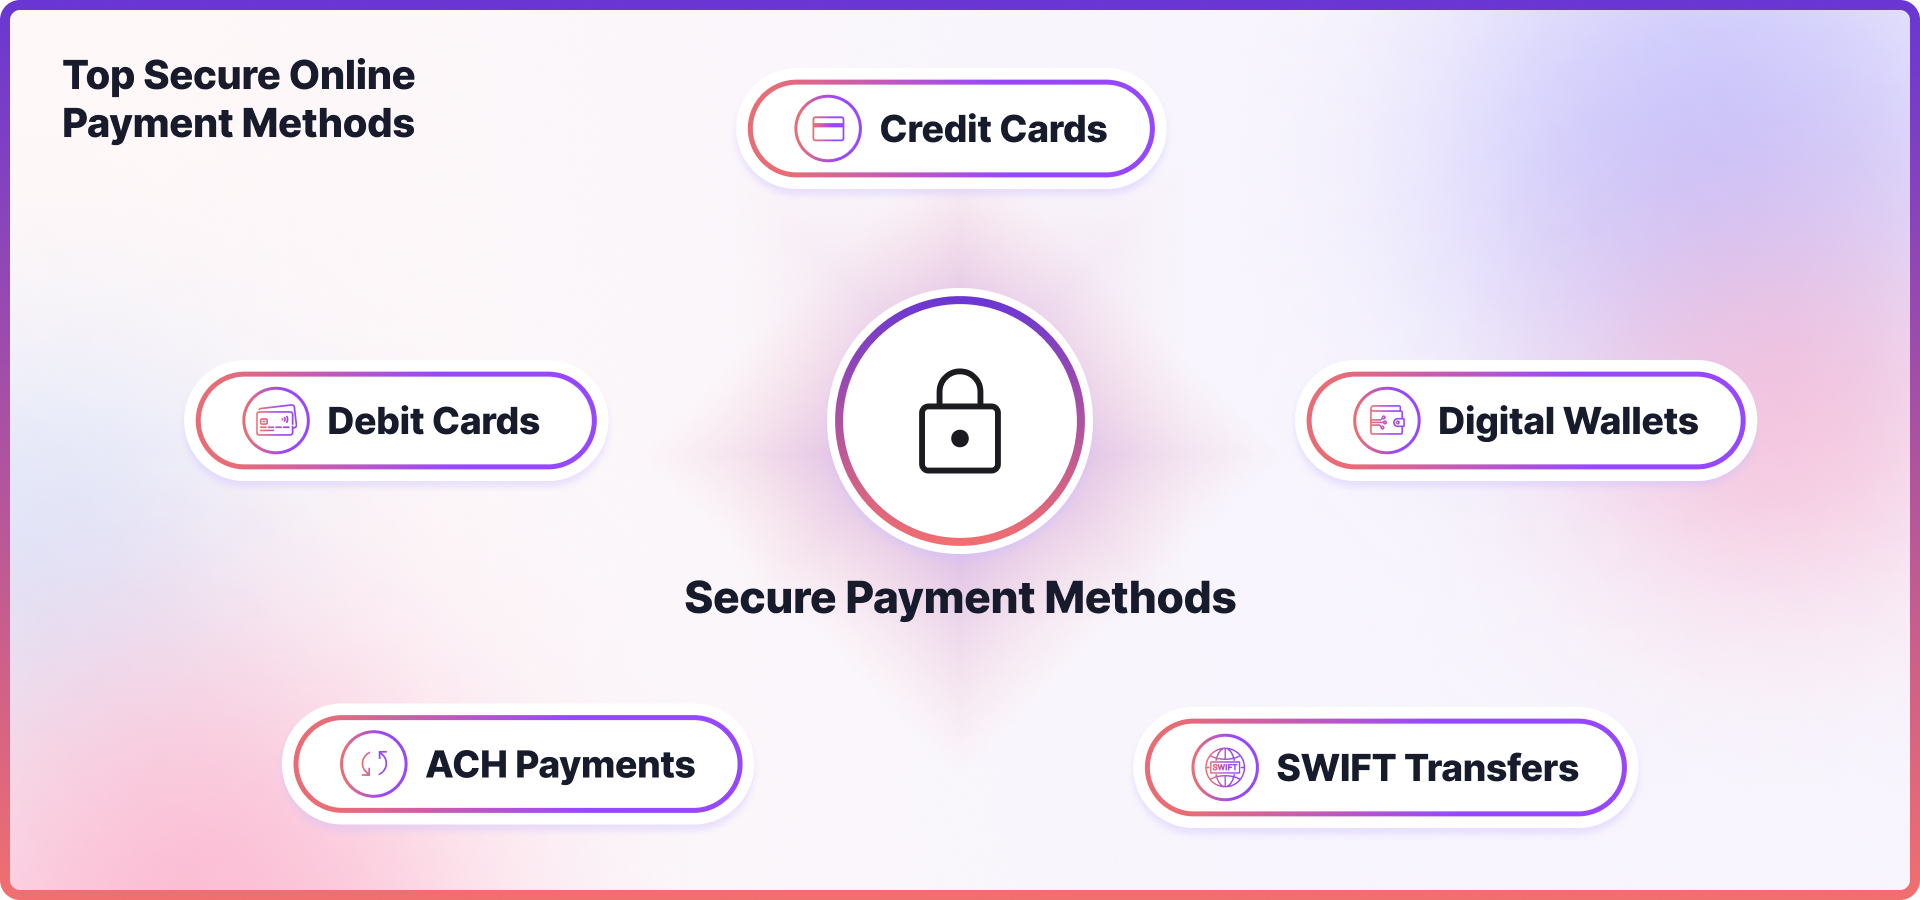 Top secure online payment methods